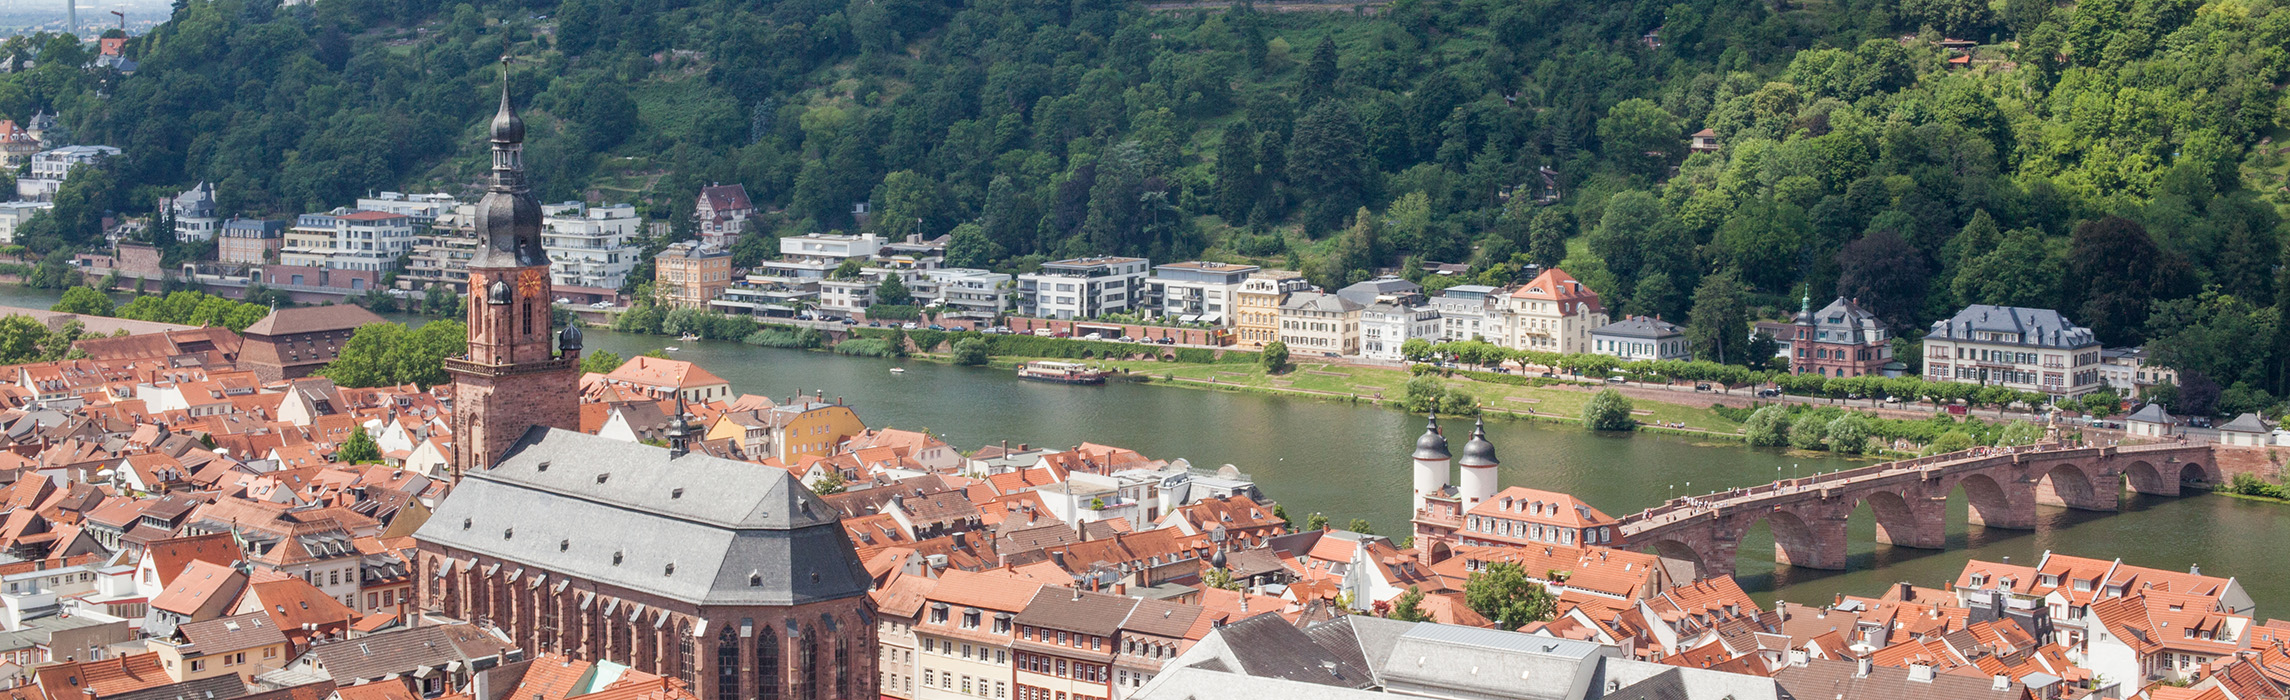 Old city center of Heidelberg (Photo: Diemer)